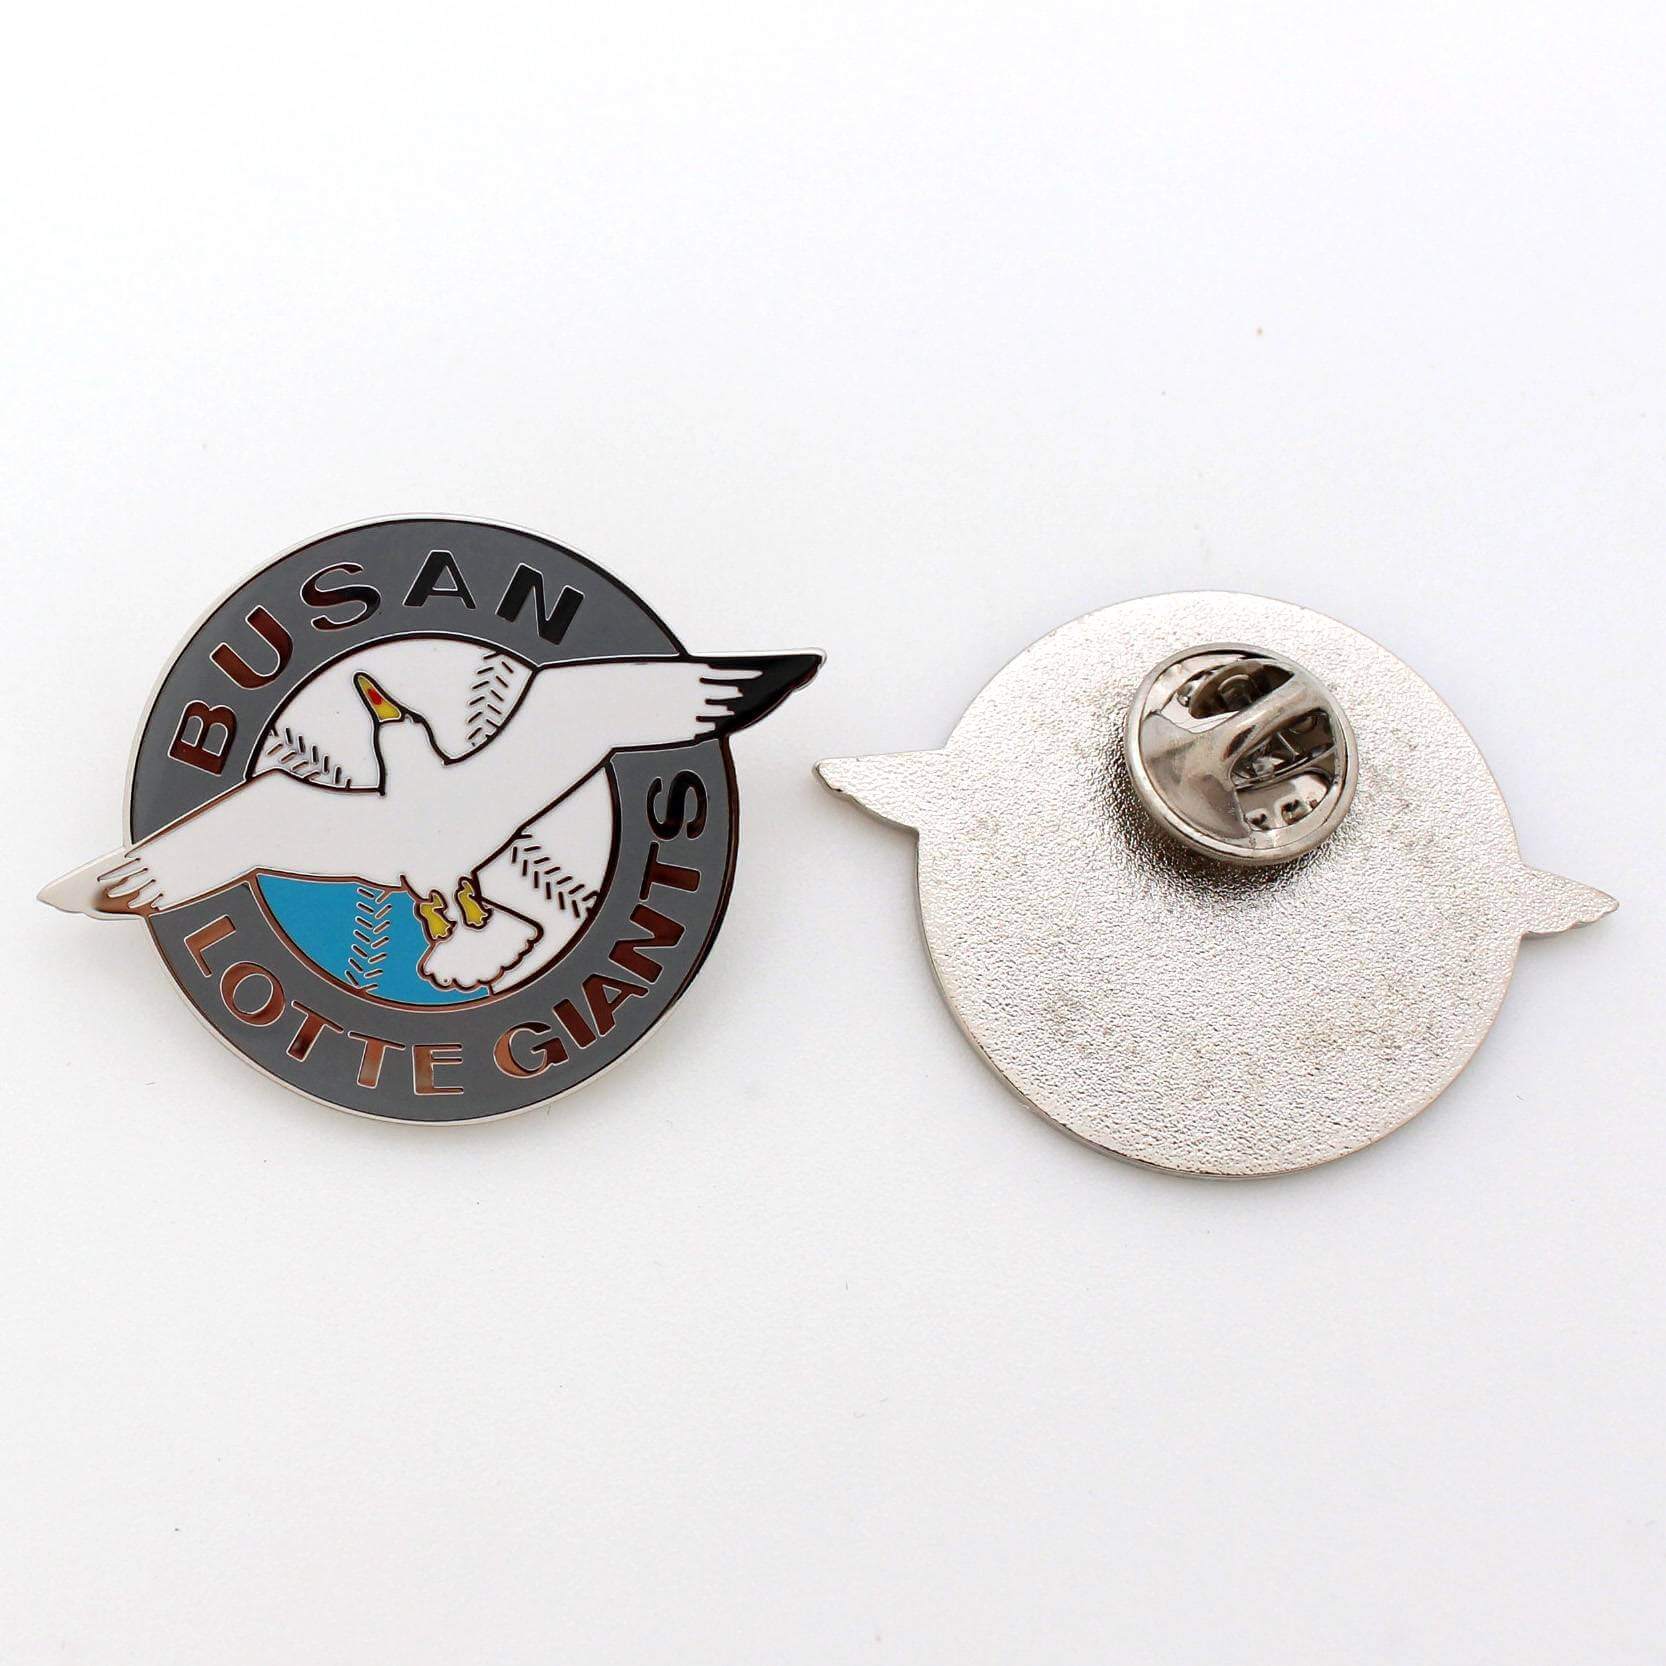 Custom Hard Enamel Collar Pin Brass Blank Pin Badge for Tourist Promotion Gift 